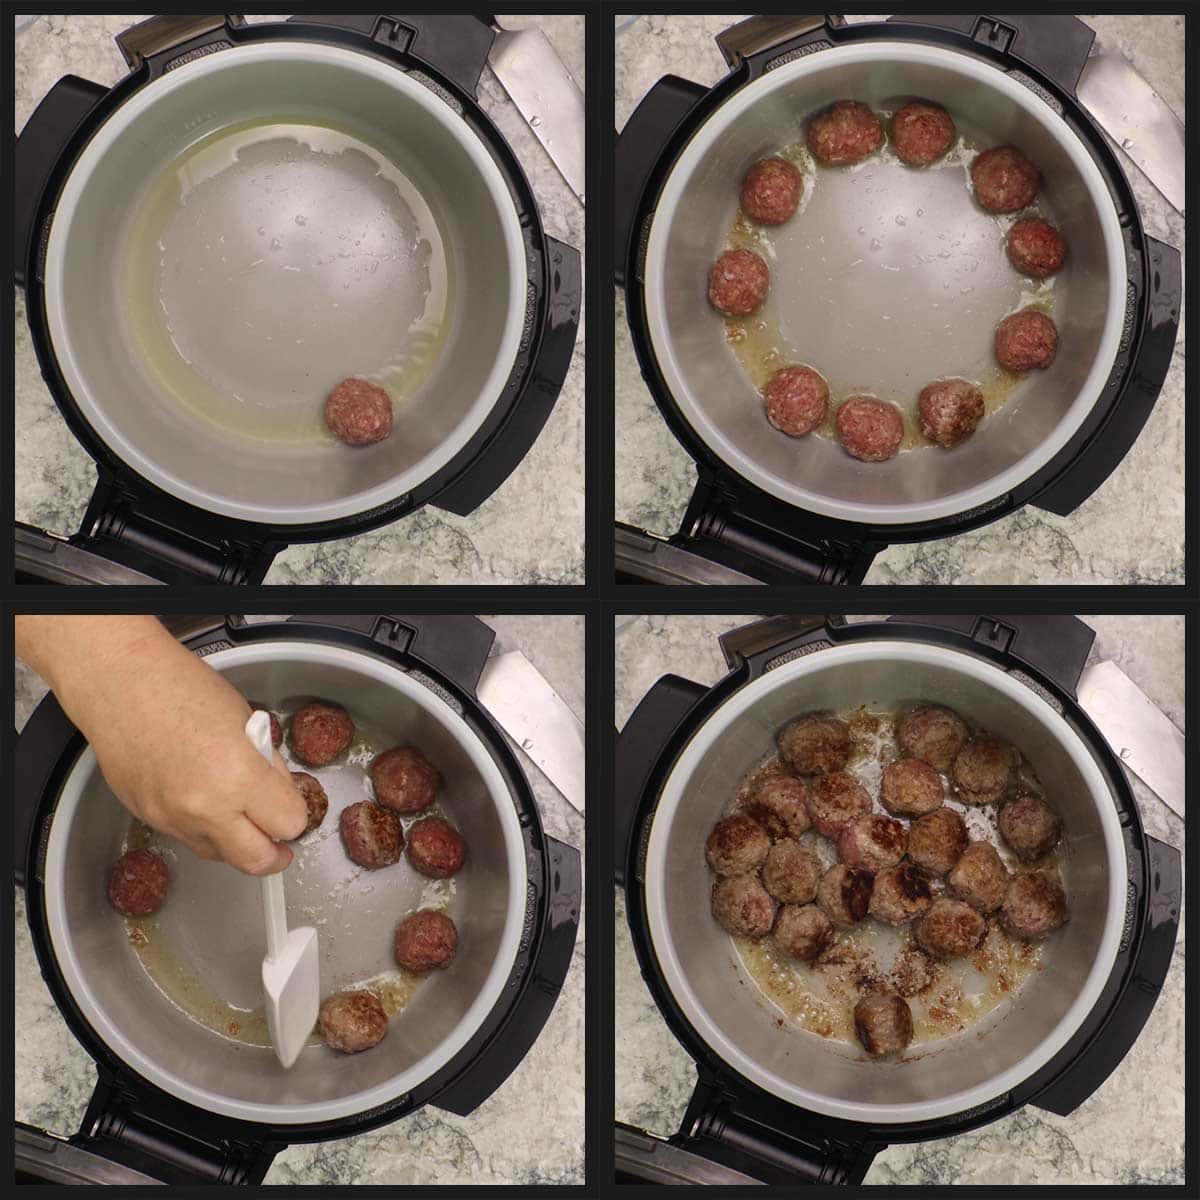 browning meatballs in the inner pot of the Ninja Foodi in oil.